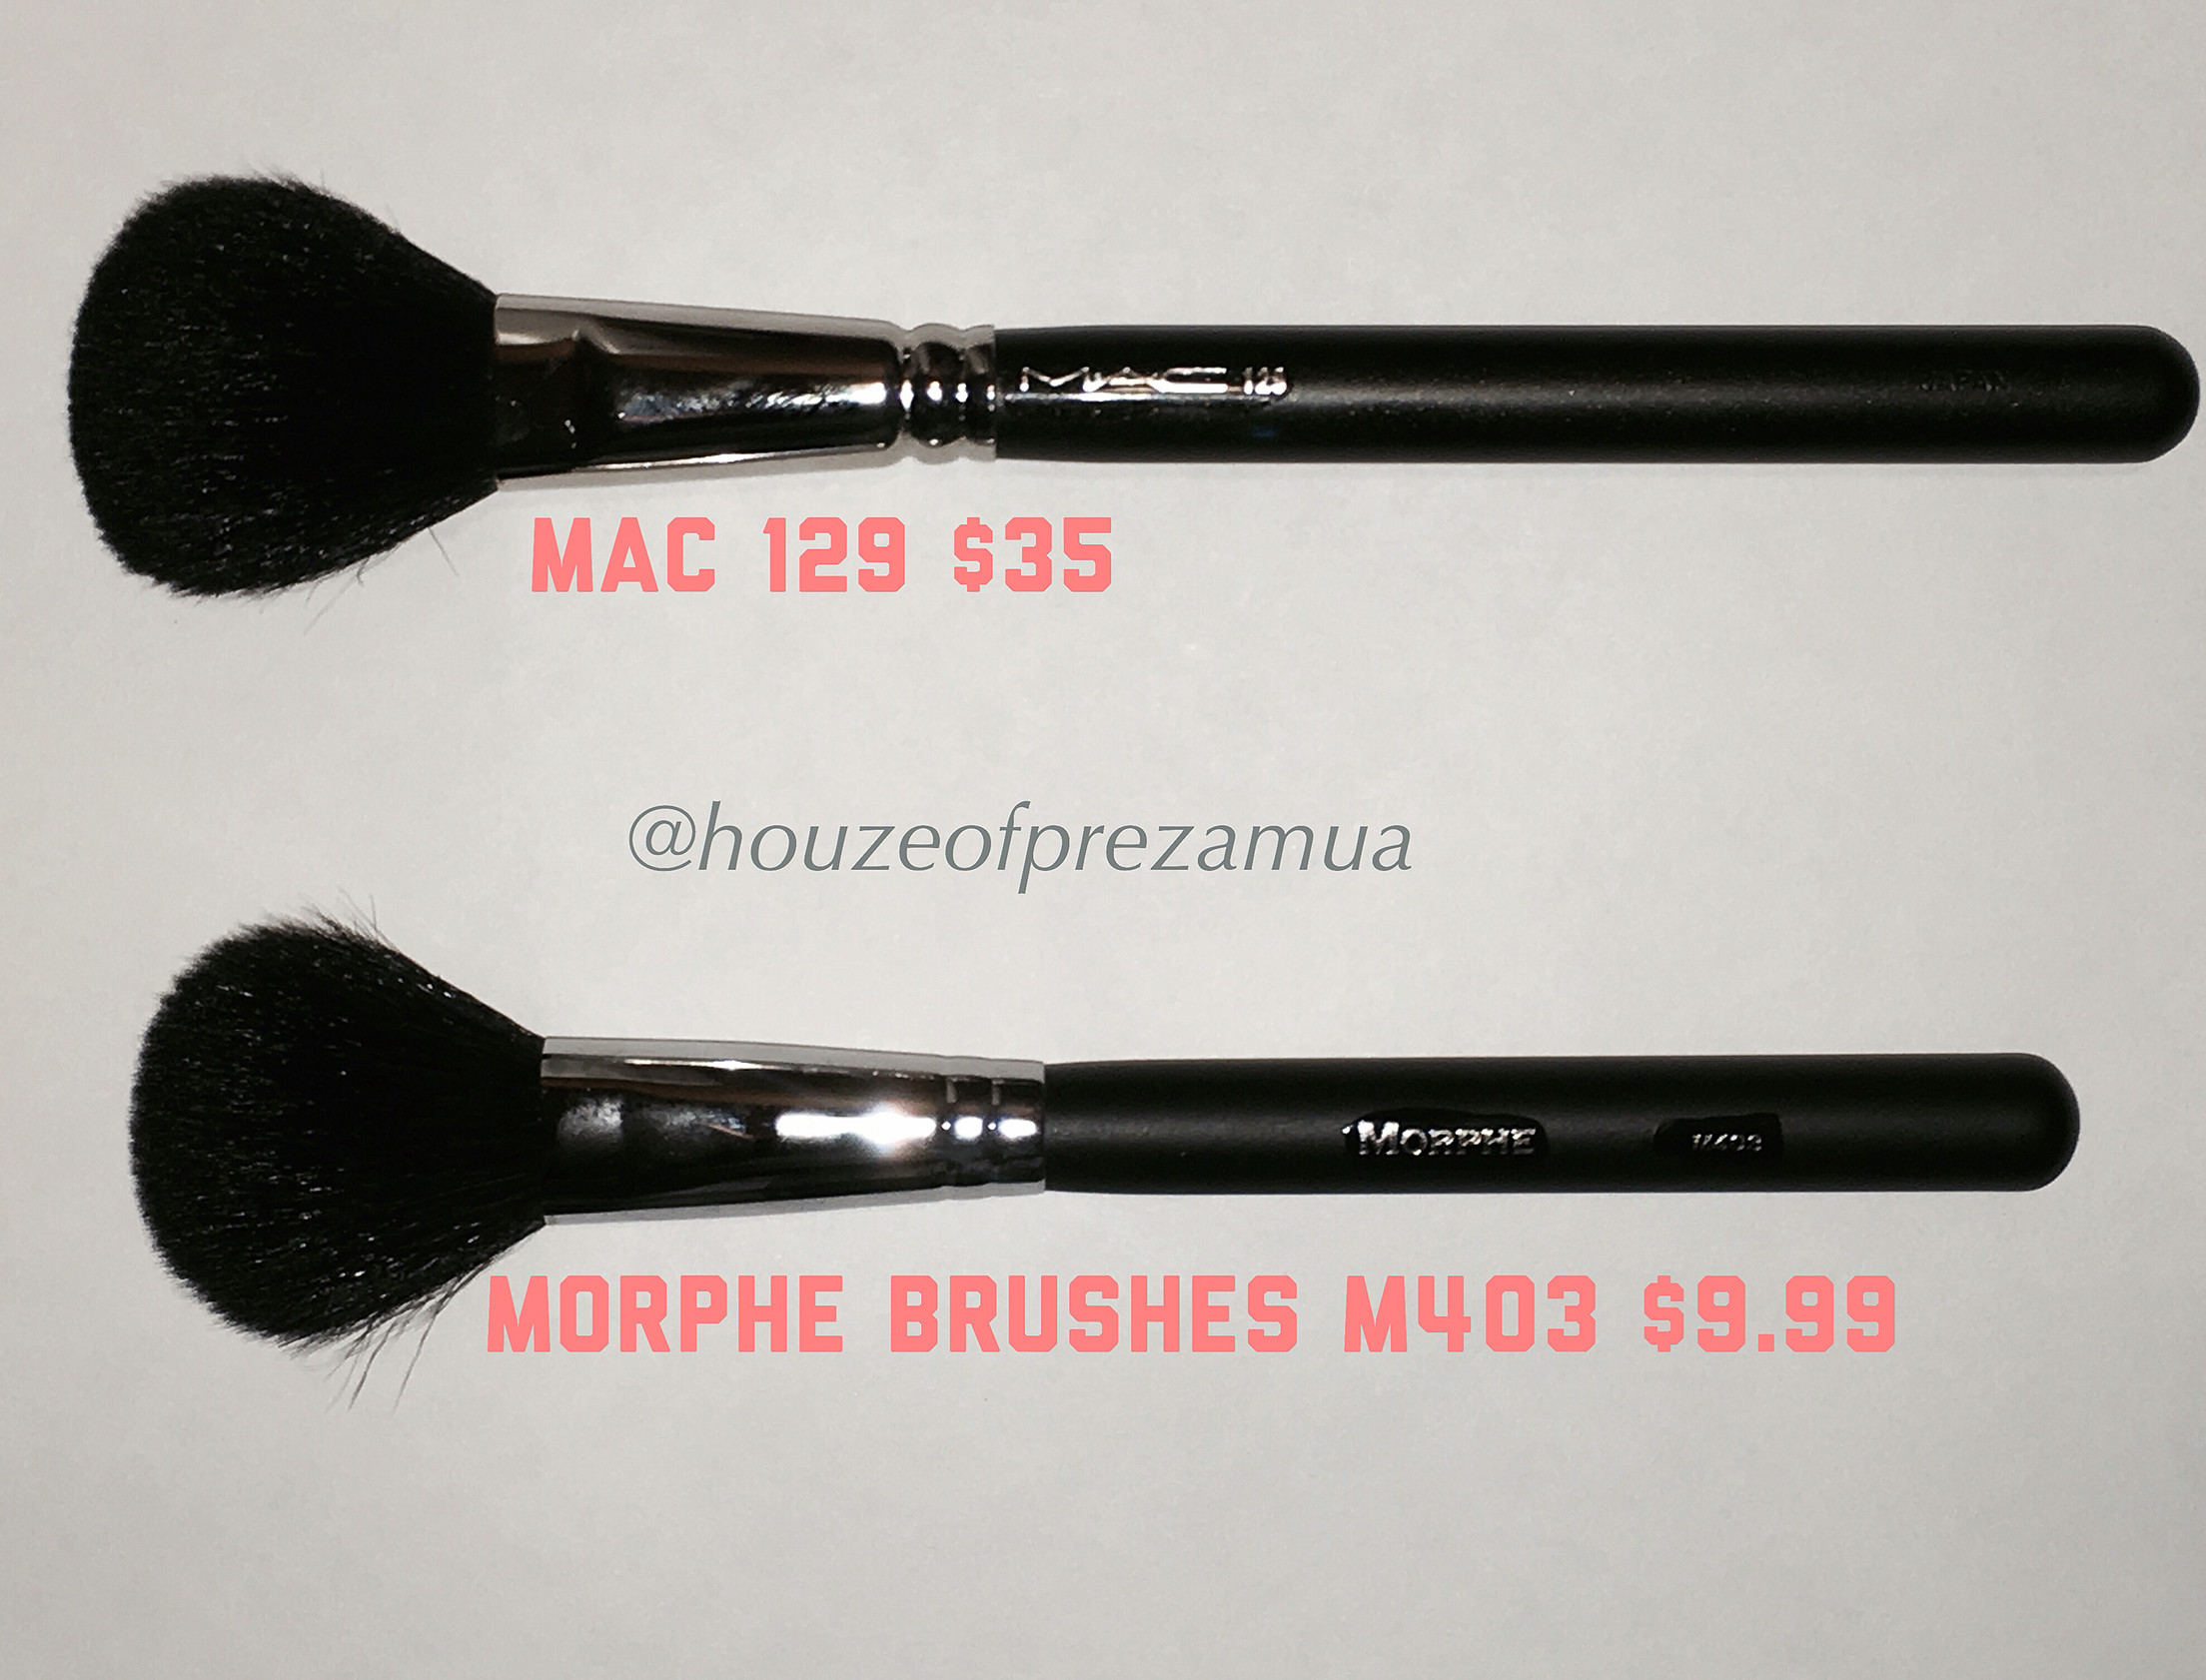 MAC 129 brush dupe. Morphe Brushes M403 brush